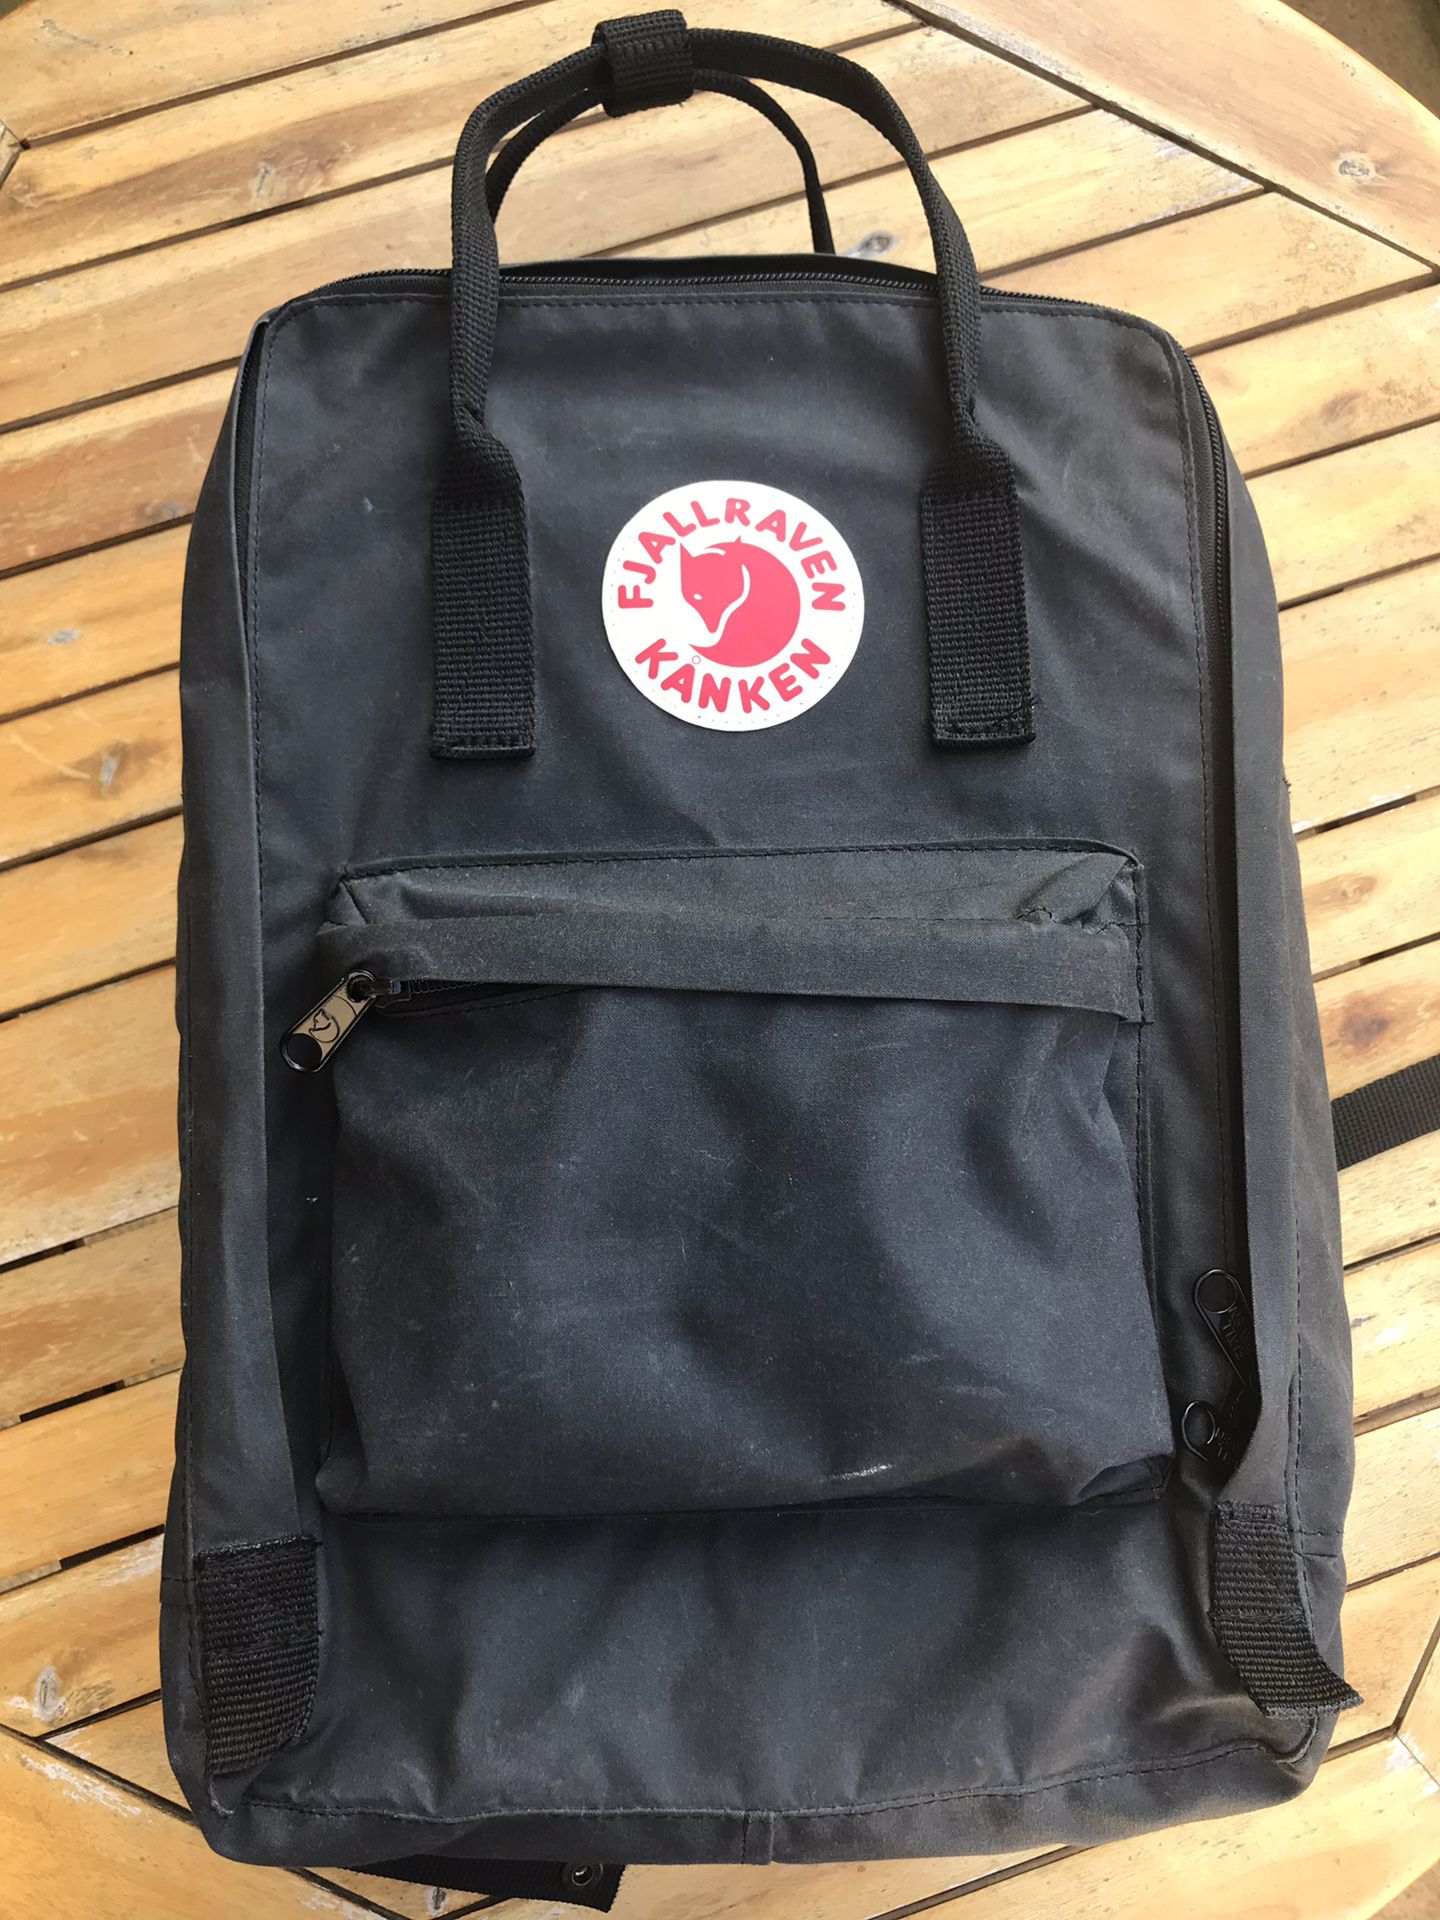 Fjallraven Kanken backpack with photo insert